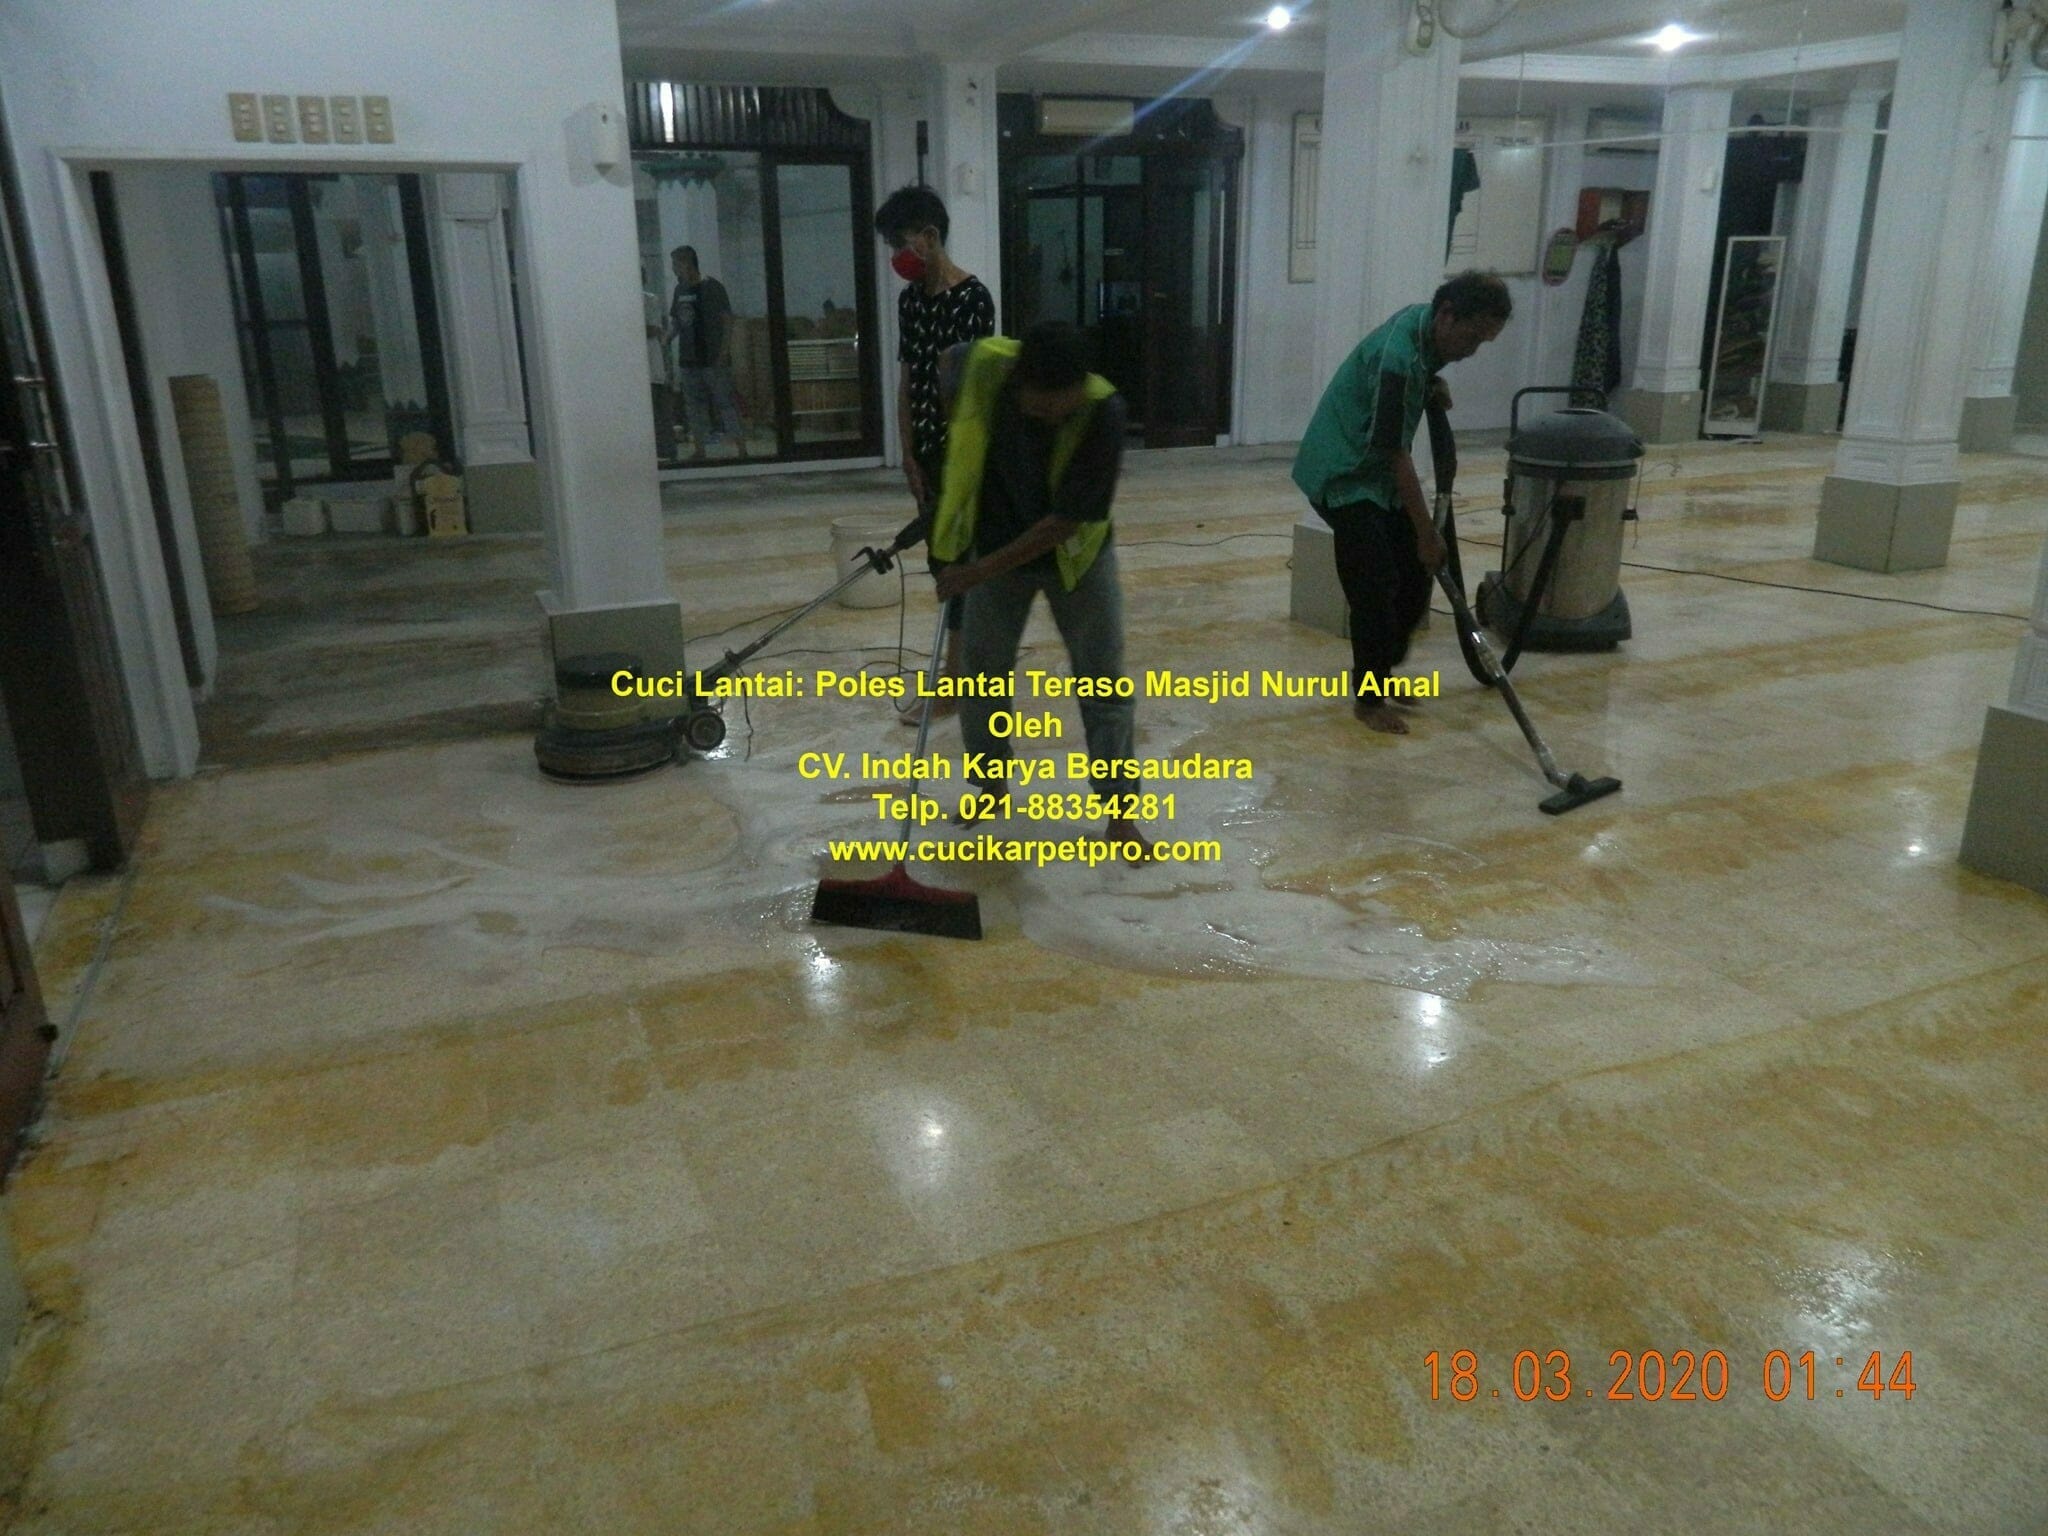 cuci lantai: poles lantai teraso masjid nurul amal 14